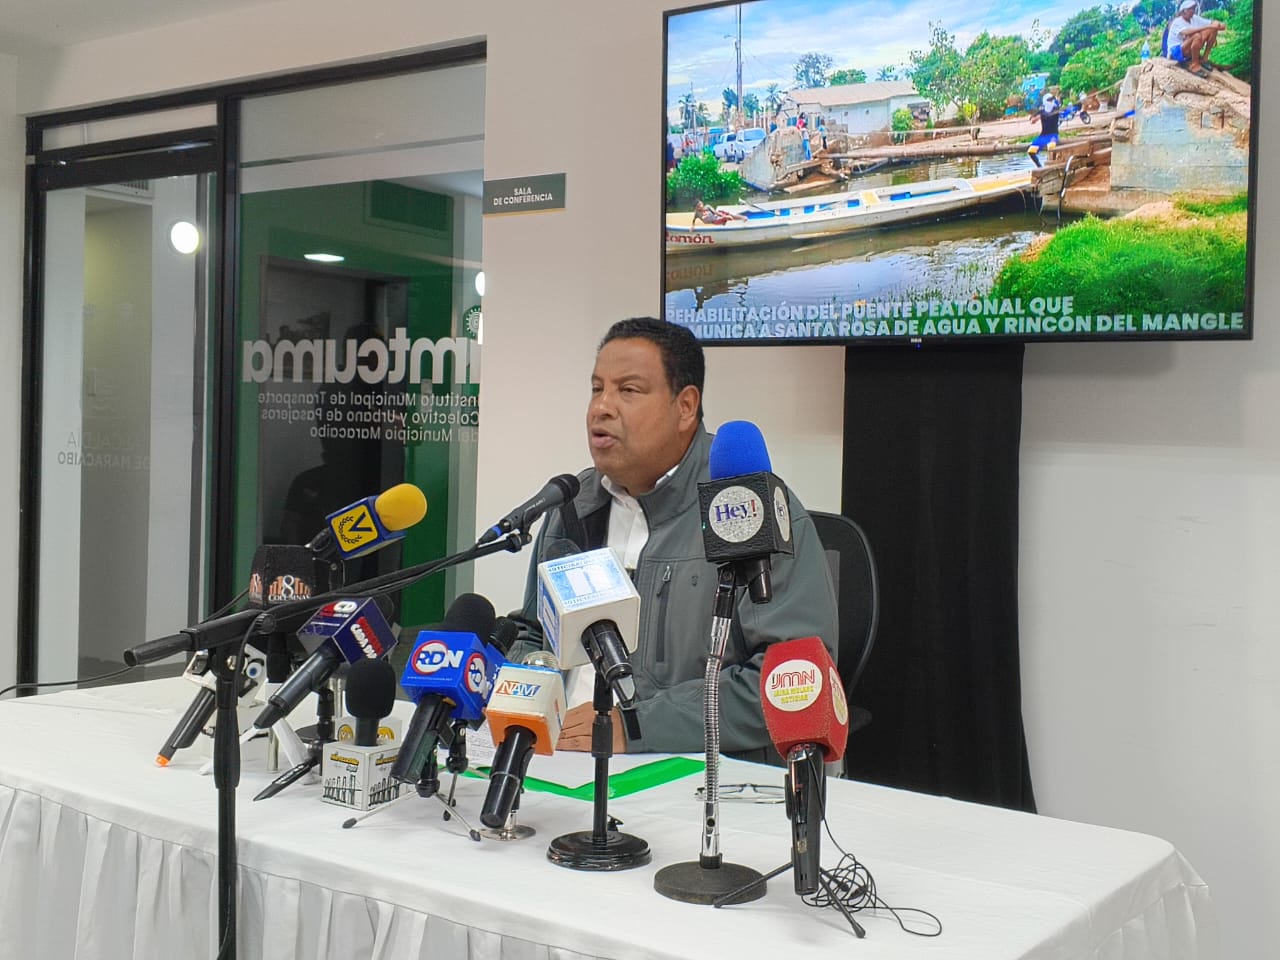 Alcalde de Maracaibo se la cantó a Reverol: “Ocúpese en resolver la crisis eléctrica”